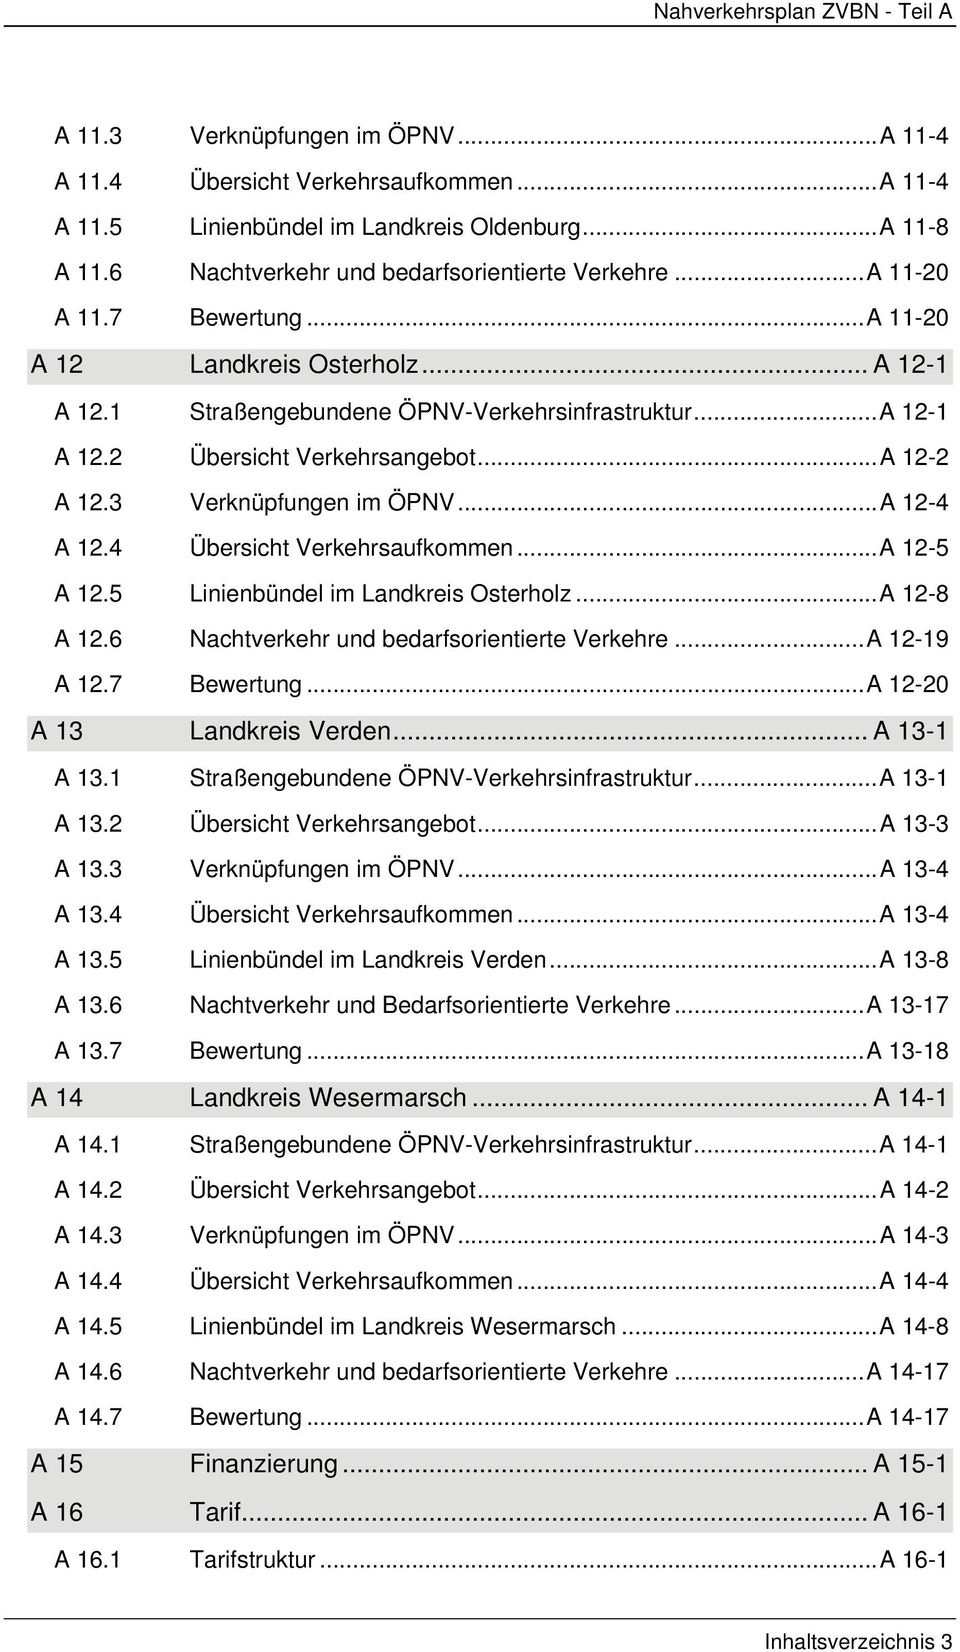 3 Verknüpfungen im ÖPNV... A 12-4 A 12.4 Übersicht Verkehrsaufkommen... A 12-5 A 12.5 Linienbündel im Landkreis Osterholz... A 12-8 A 12.6 Nachtverkehr und bedarfsorientierte Verkehre... A 12-19 A 12.